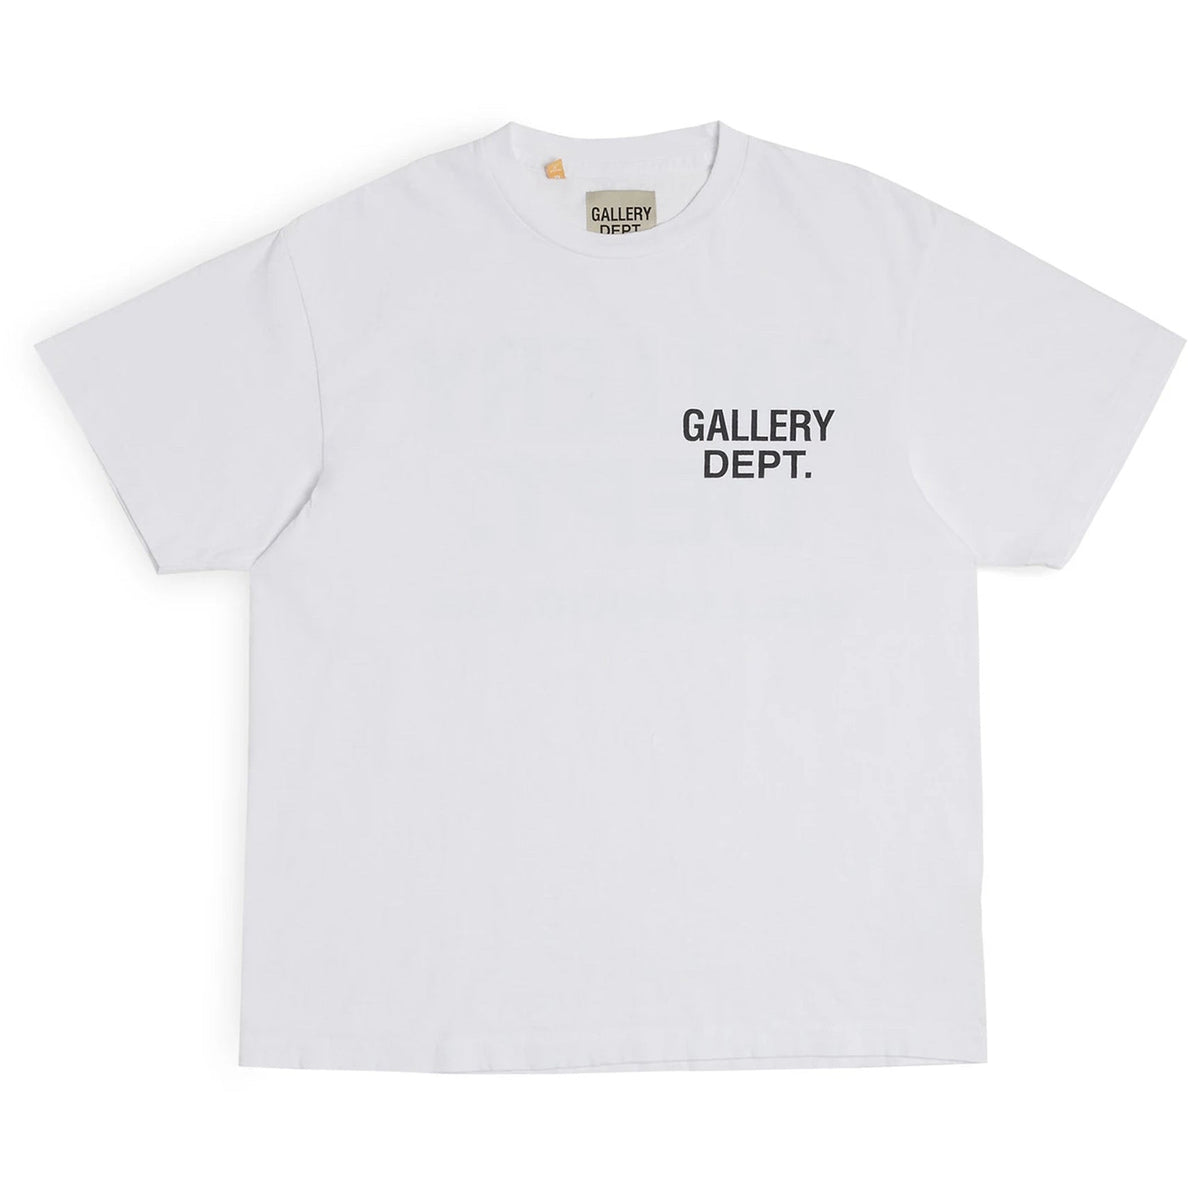 Gallery Dept Souvenir White Tee (CJ)